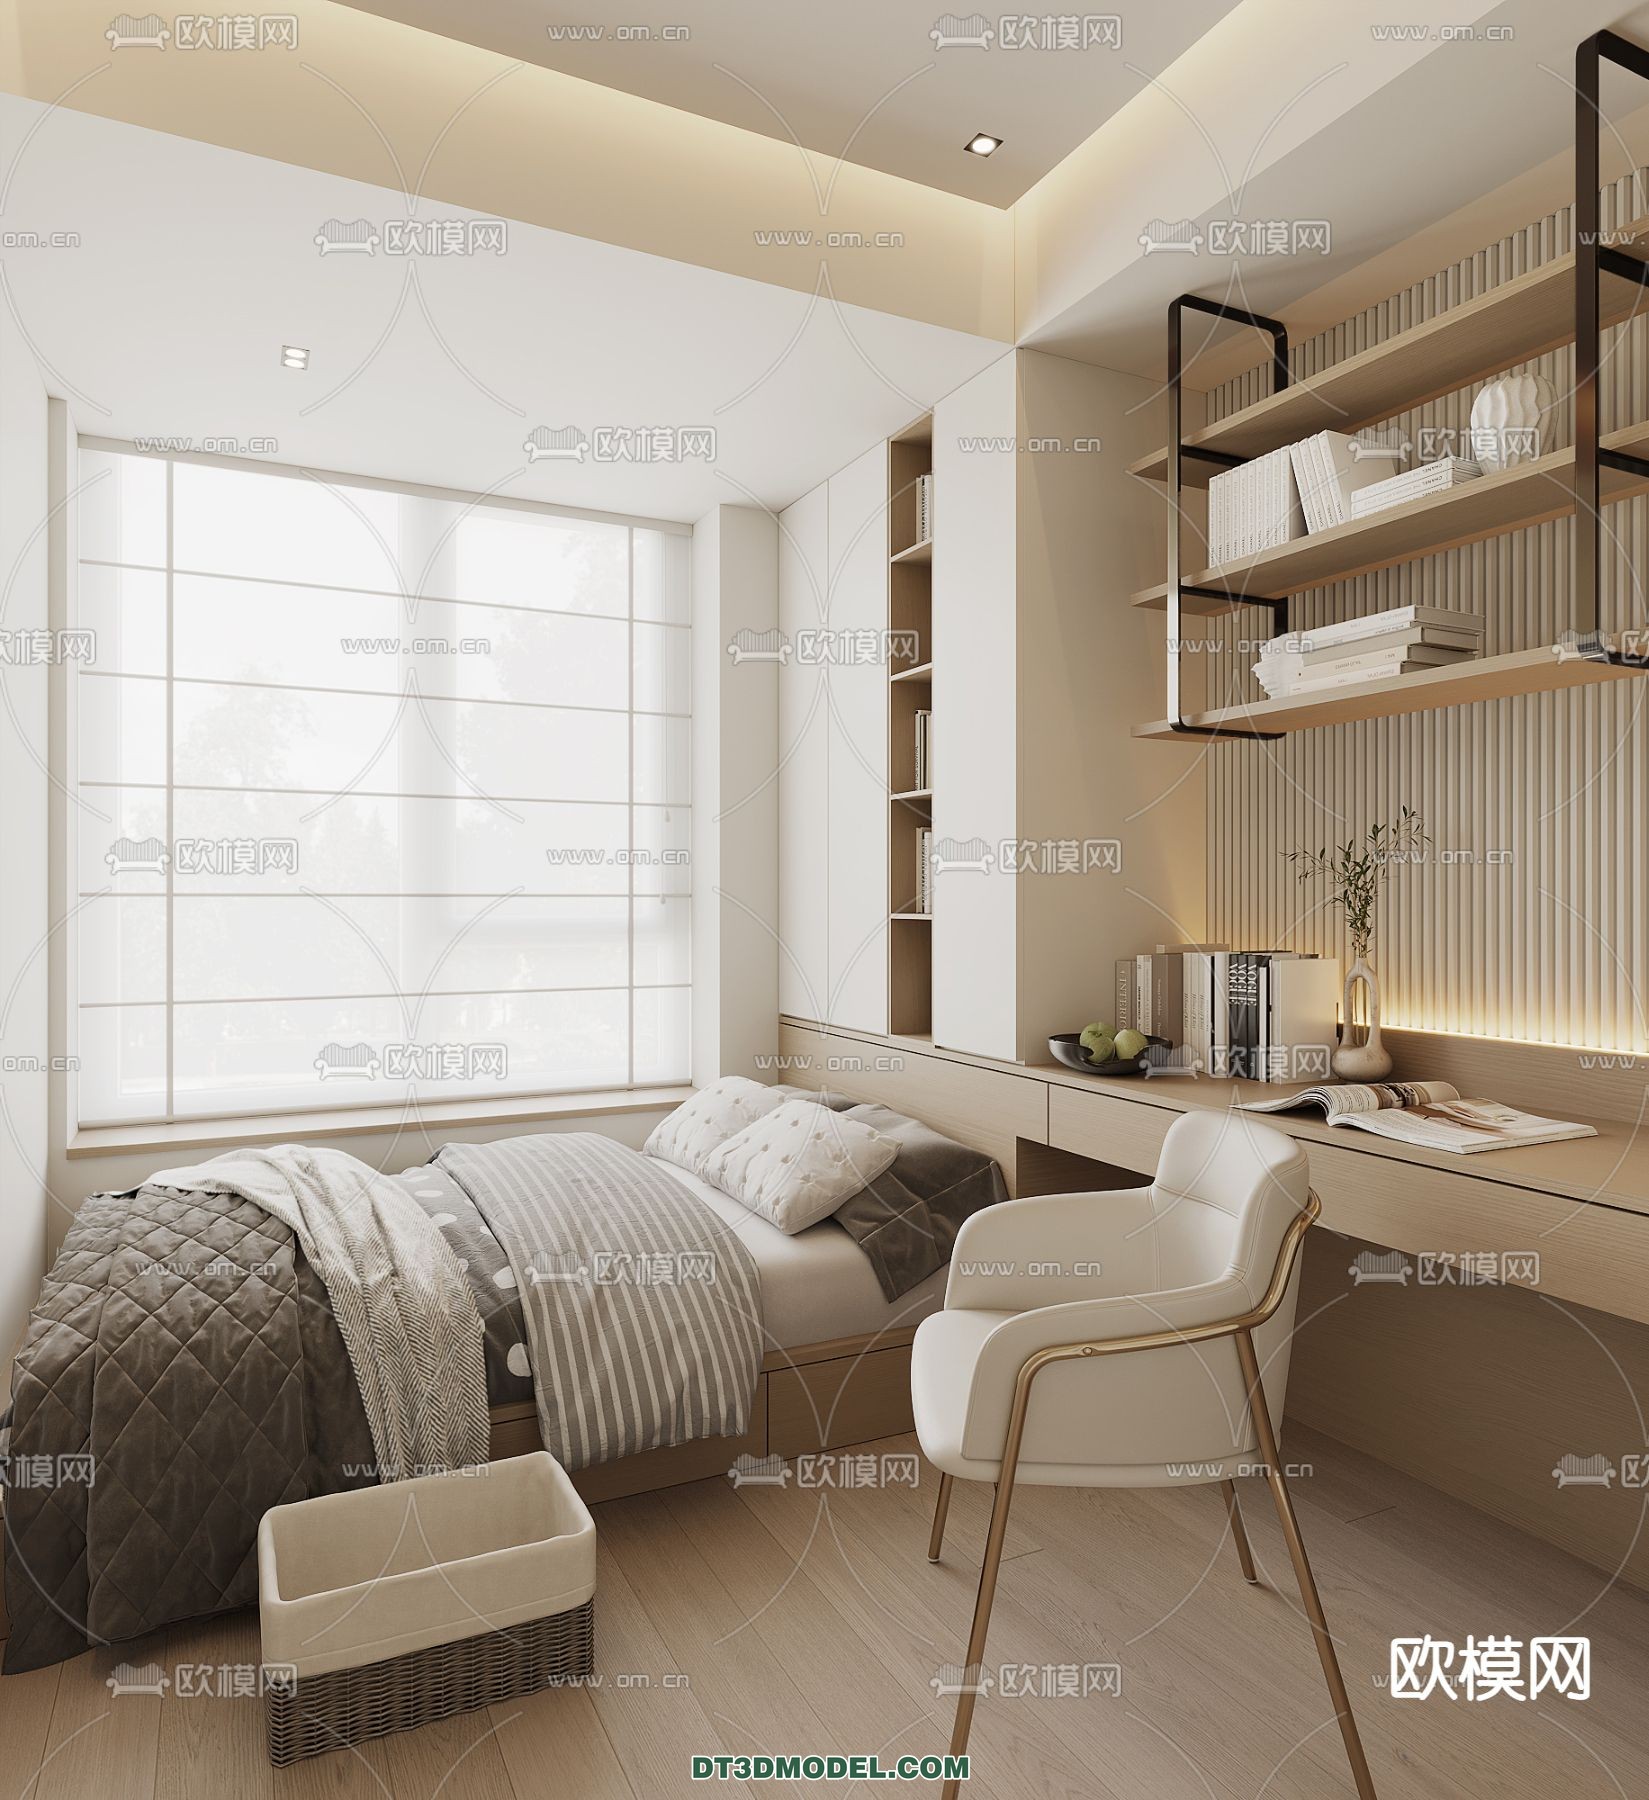 Tatami Bedroom – Japan Bedroom – 3D Scene – 004 - thumbnail 1